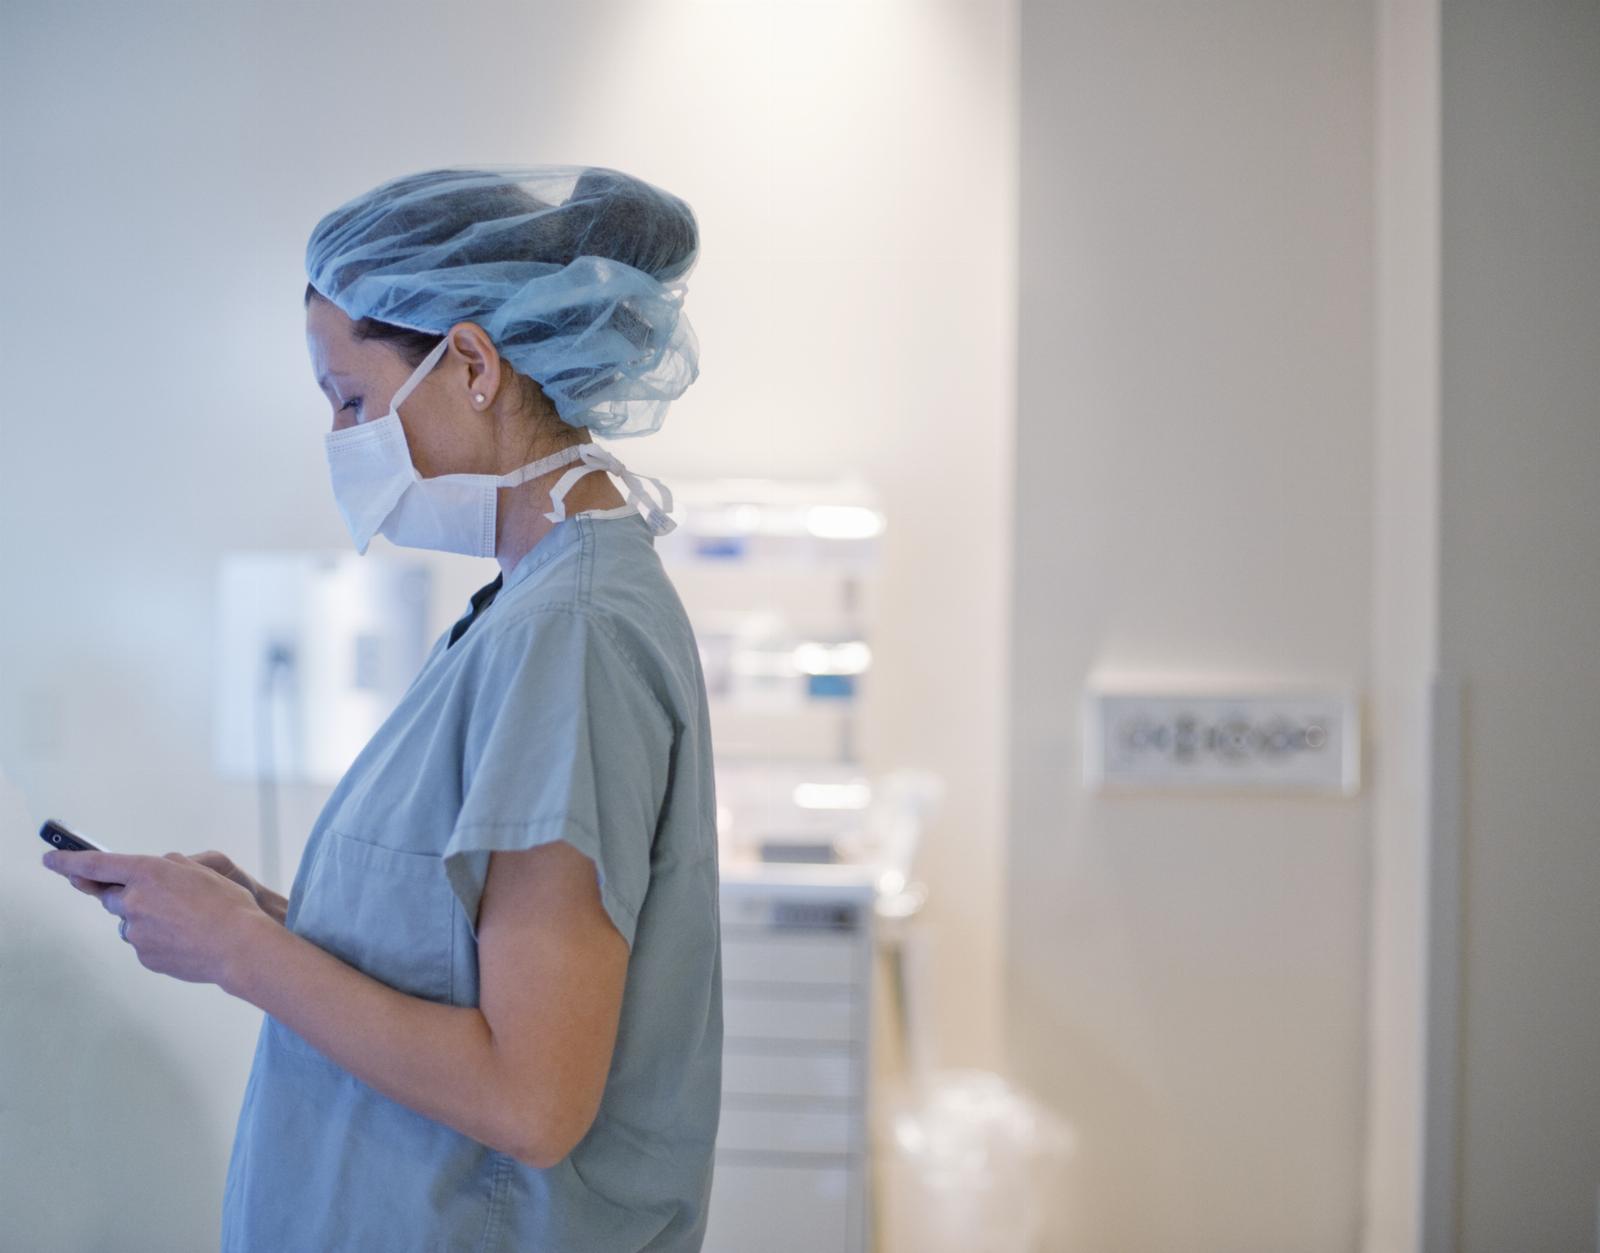 Labor marketplace ShiftMed secures $200M to solve nursing shortage